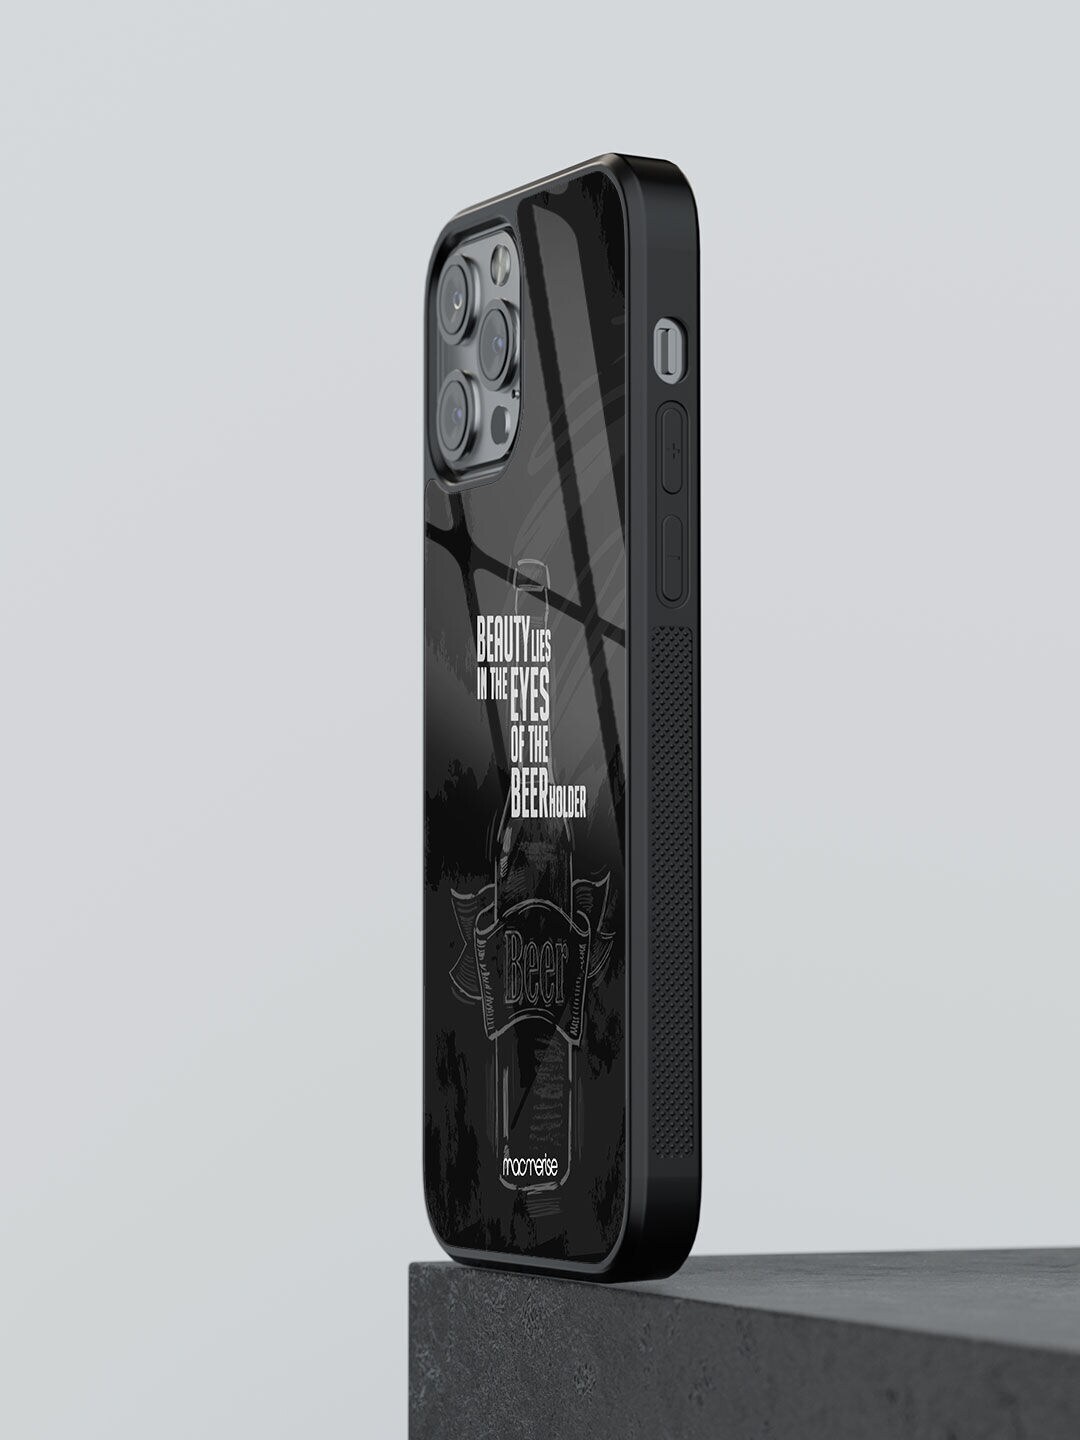 macmerise Black & White Beer Holder iPhone 12 Pro Back Case Price in India